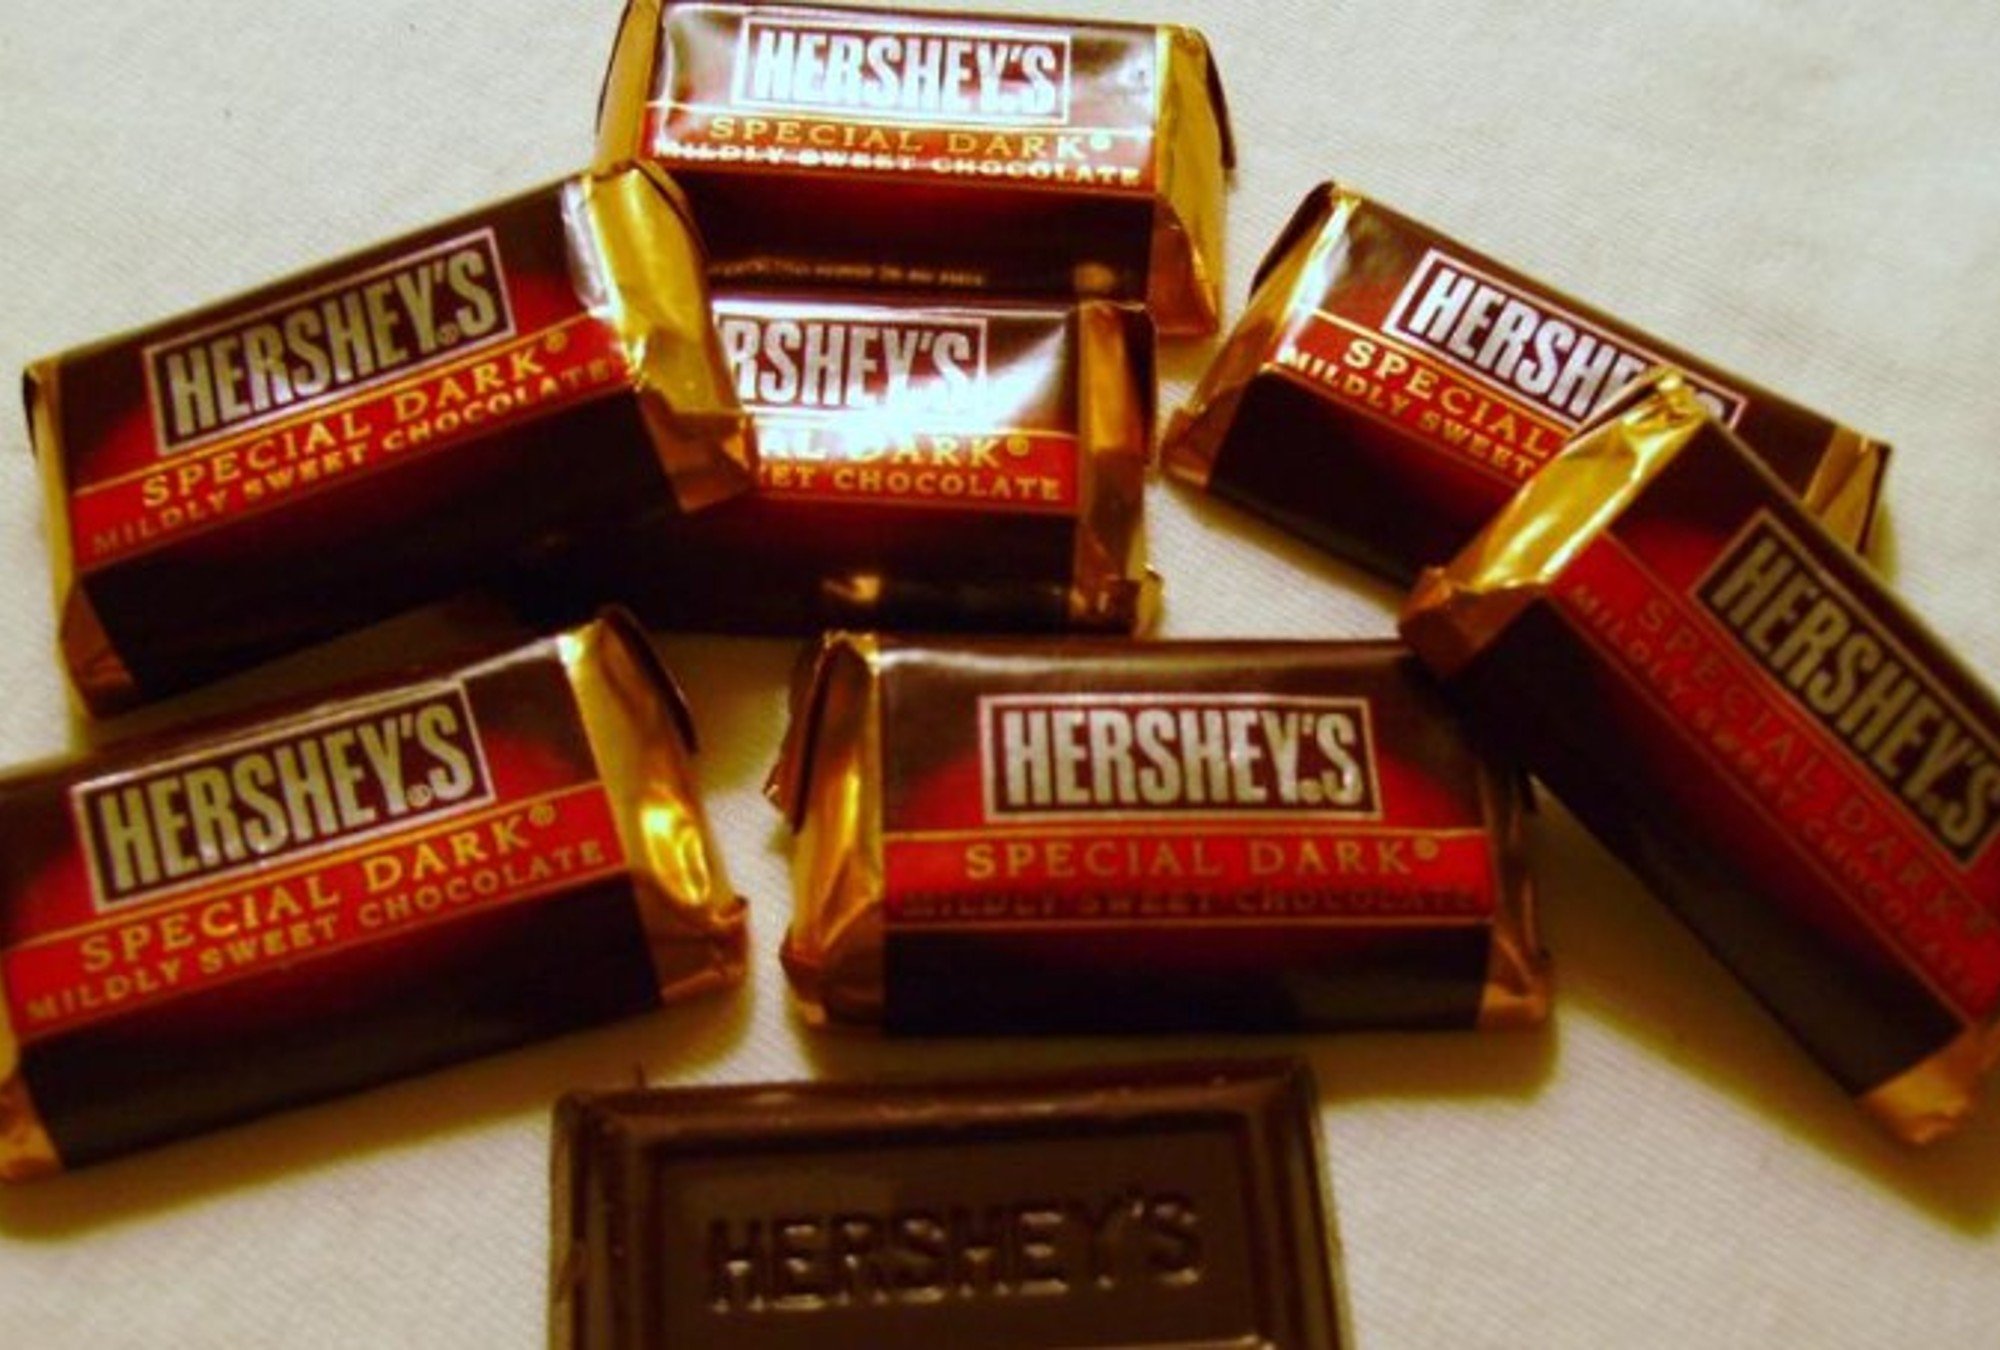 Se analizaron todo tipo de marcas de chocolate amargo.